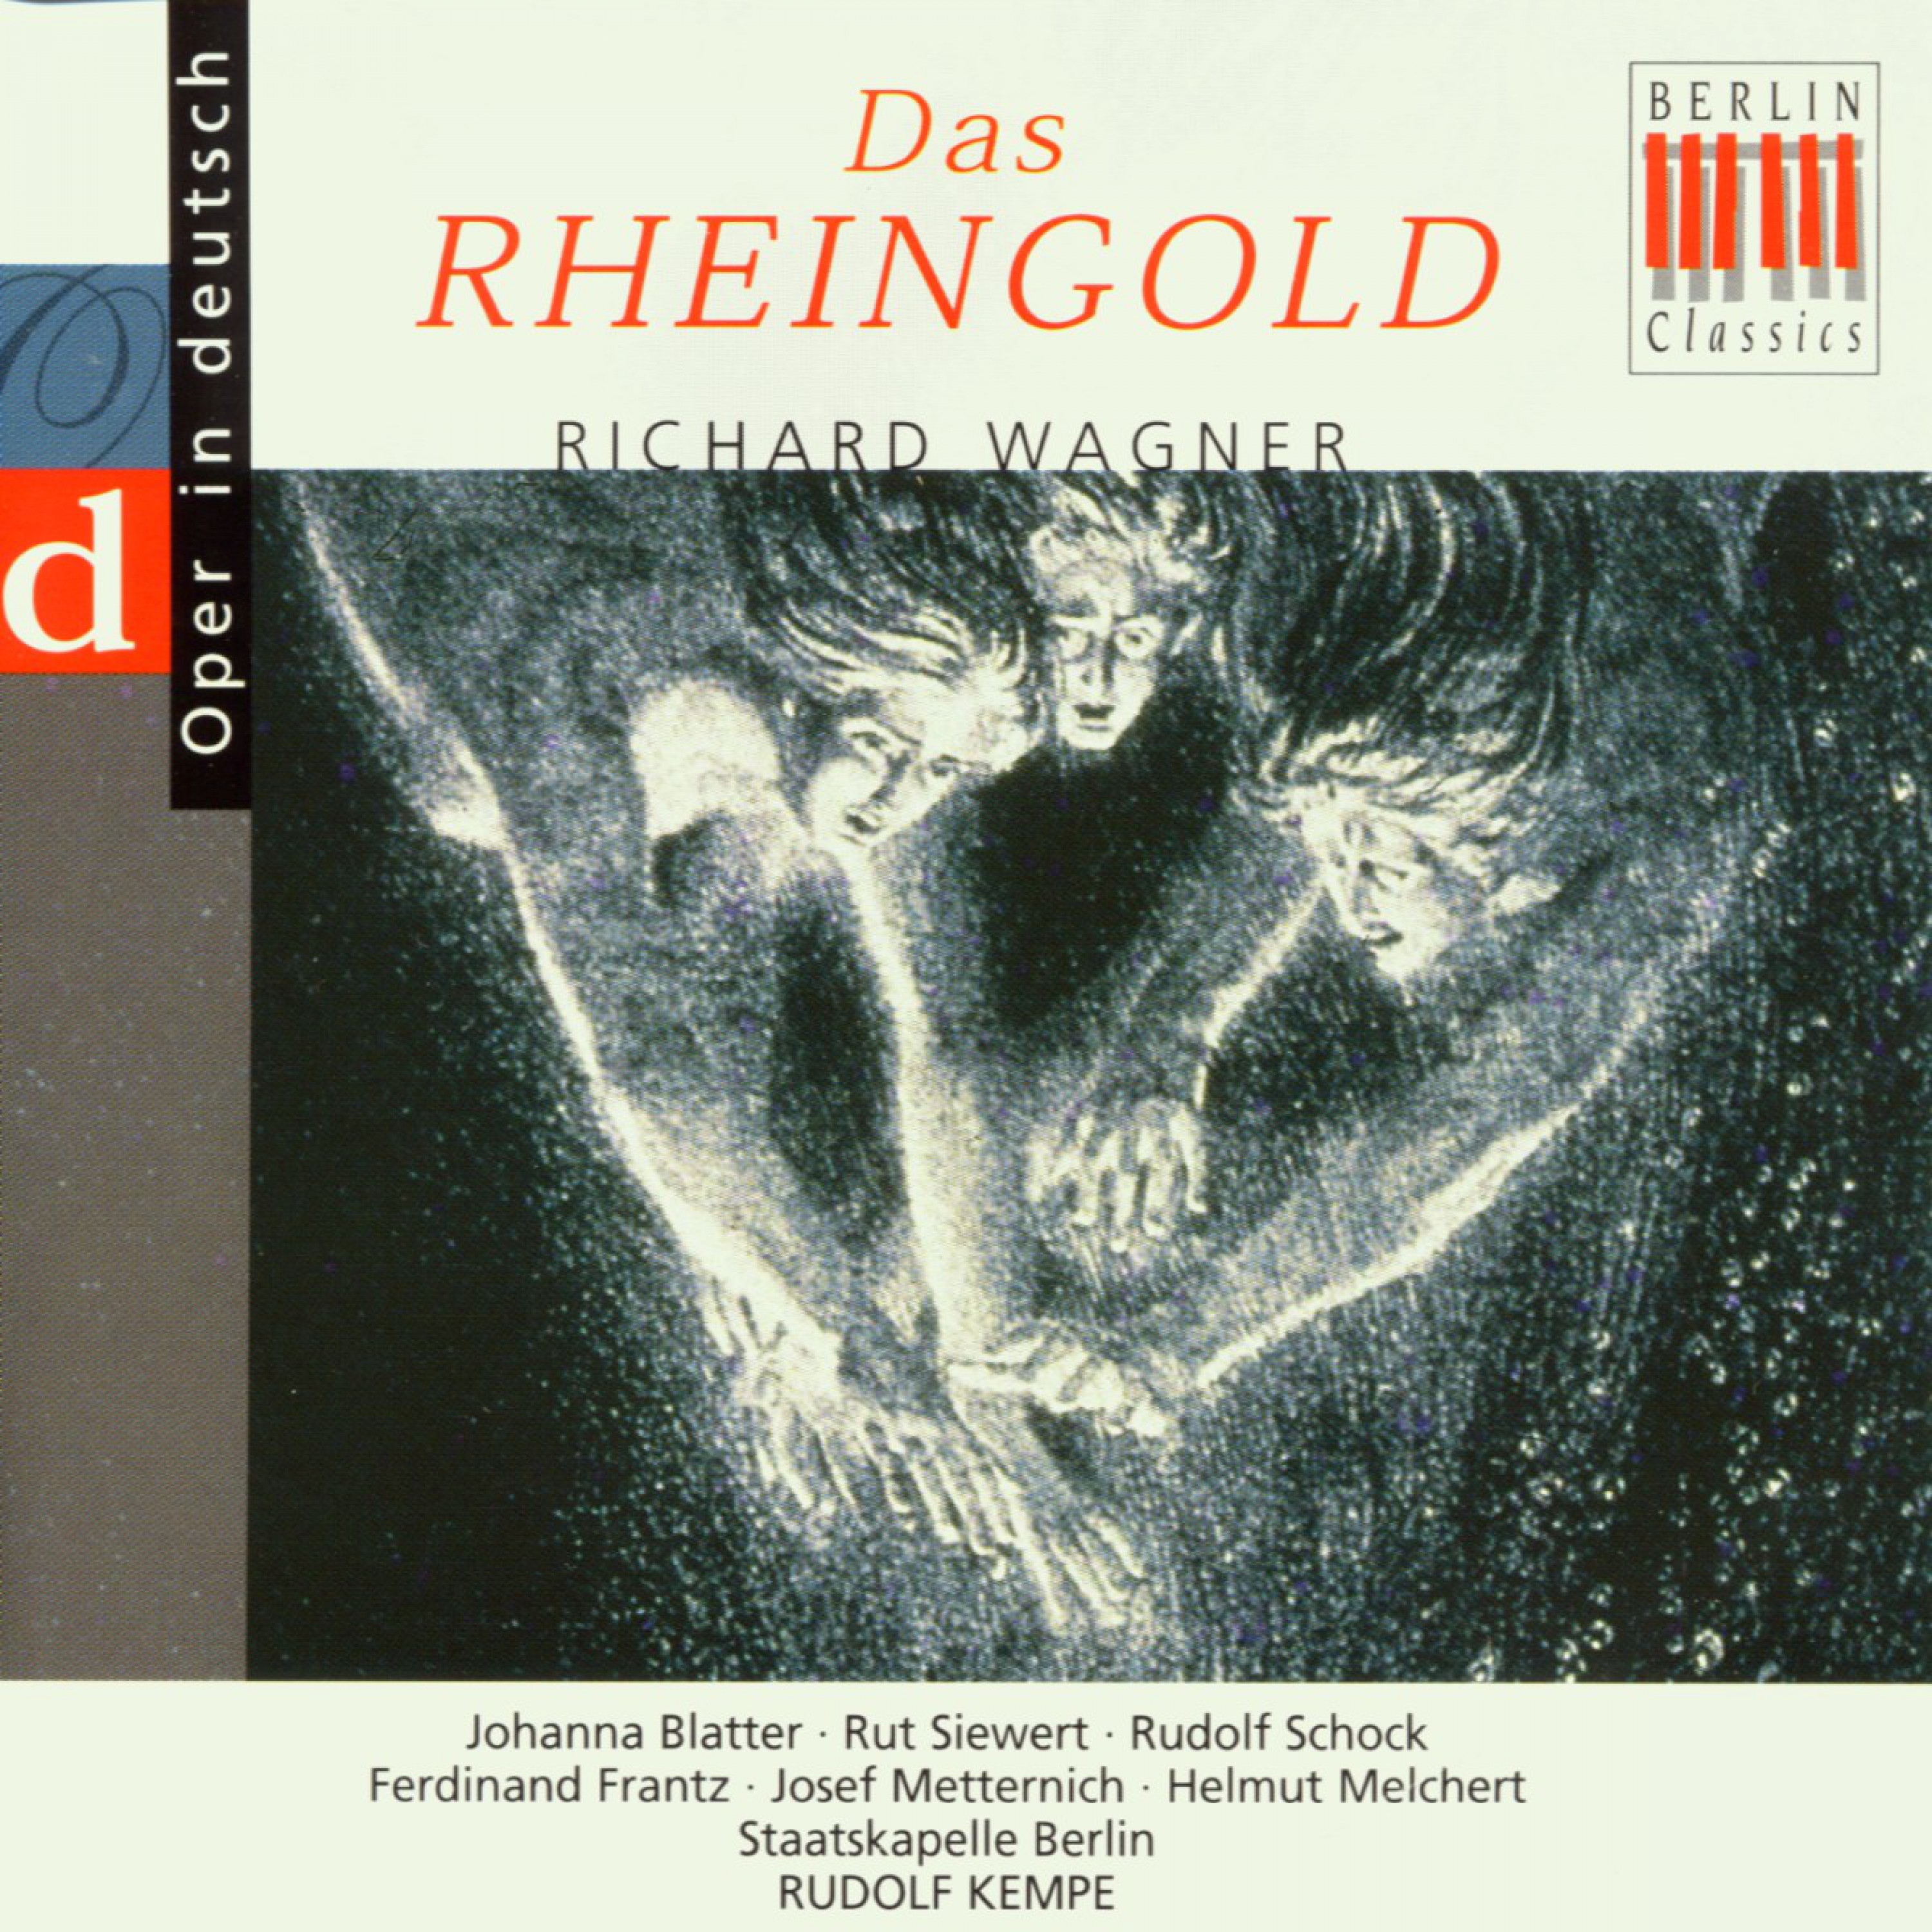 The Rhinegold: Act I - "Bin ich nun frei"